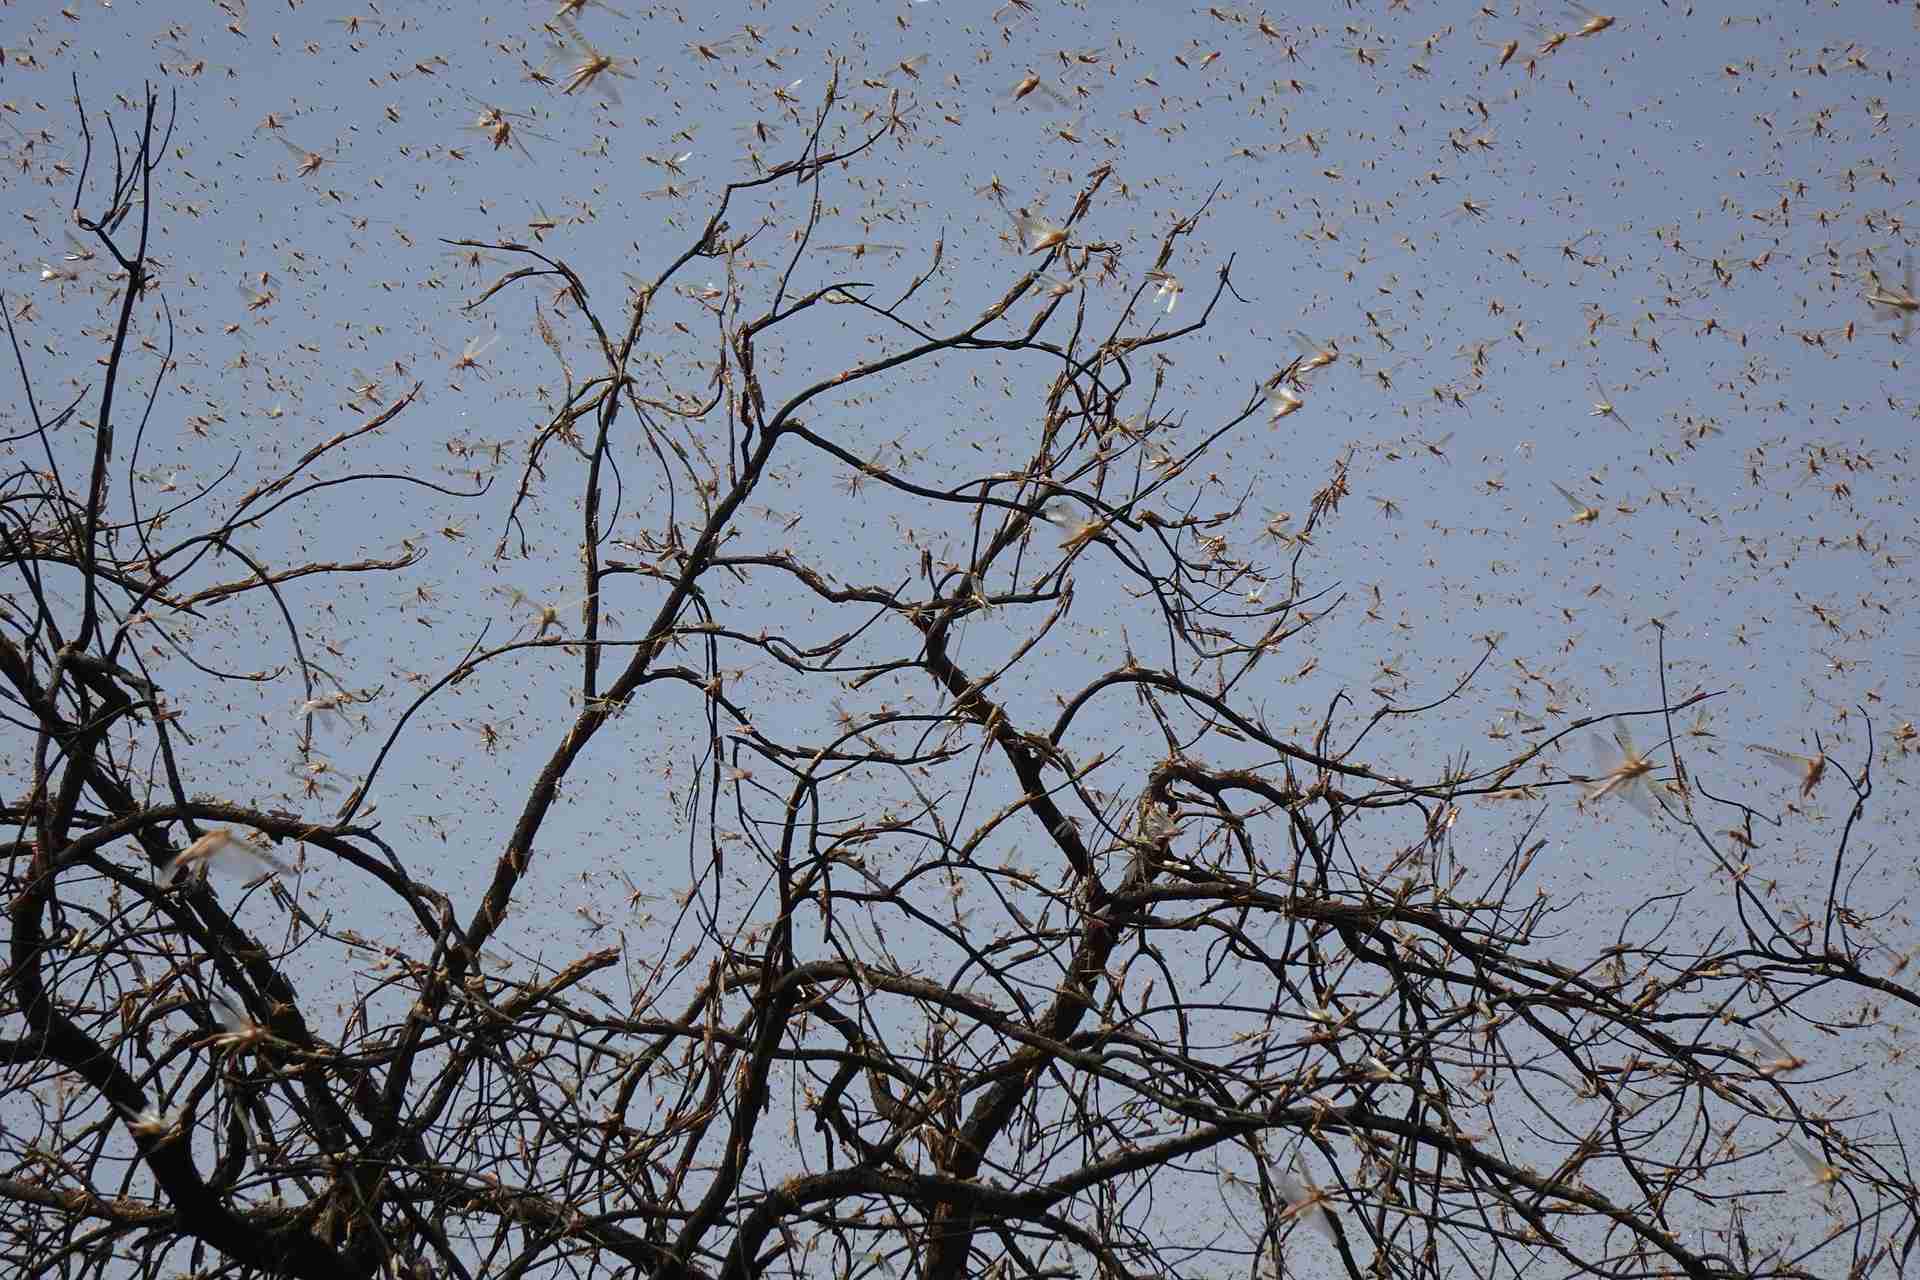 Locust swarms devour tree leaves